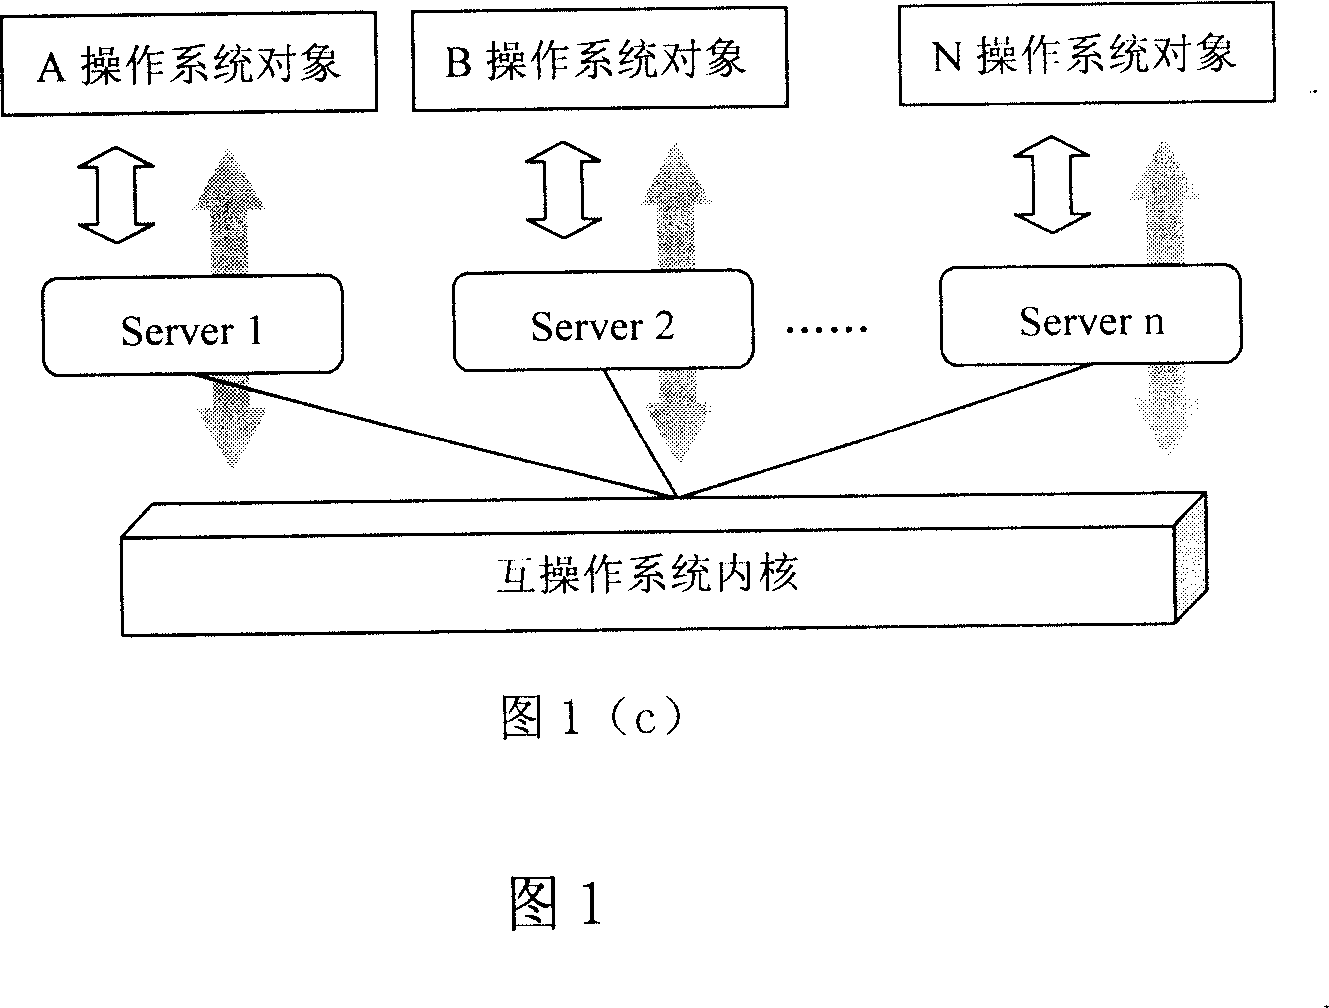 Design method of inter-operation system